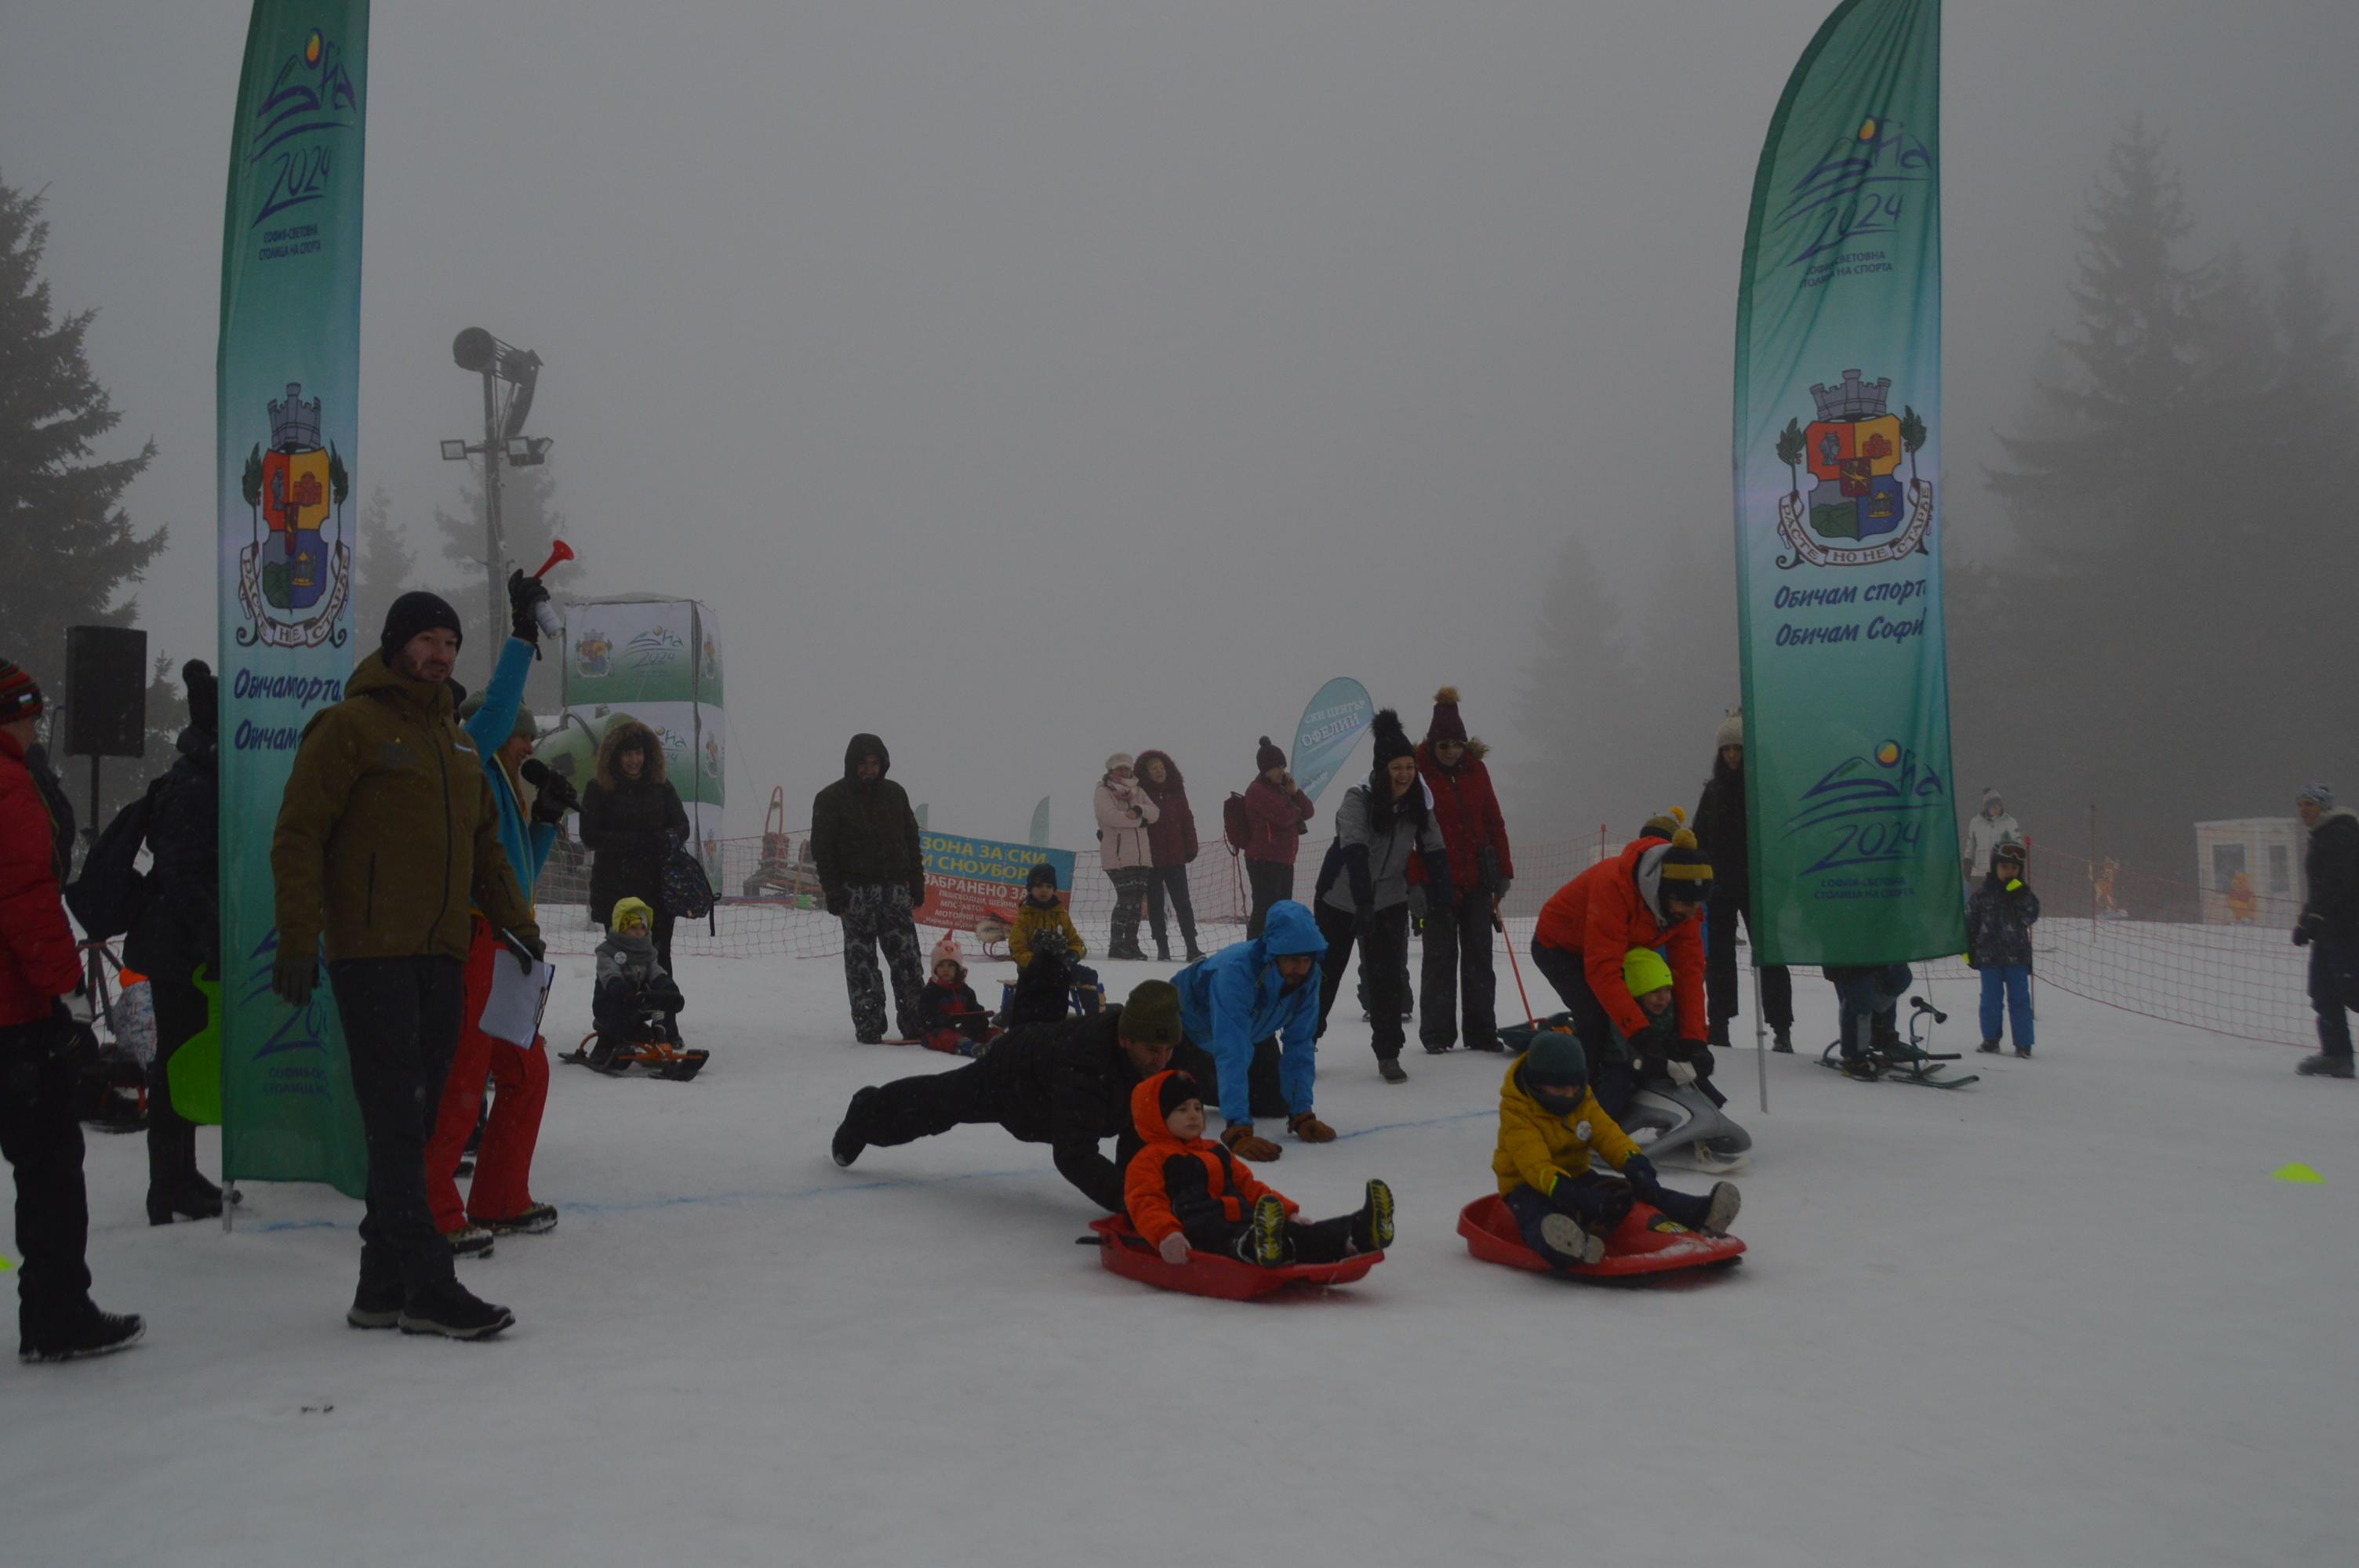 София-европейска столица на спорта отличи и скиорите паралимпийци на Зимния